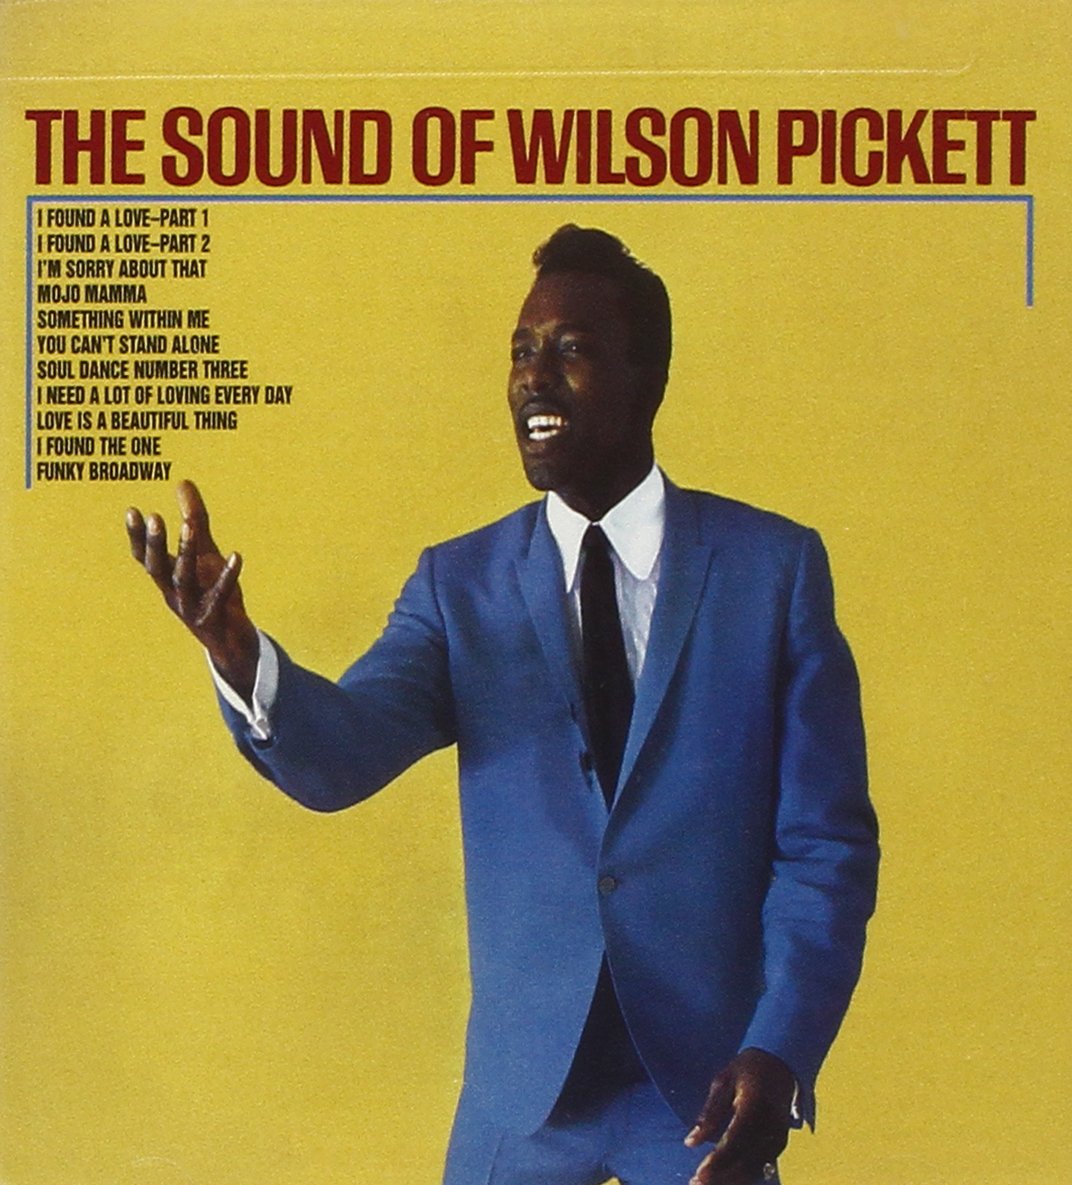 Happy birthday, Wilson Pickett!